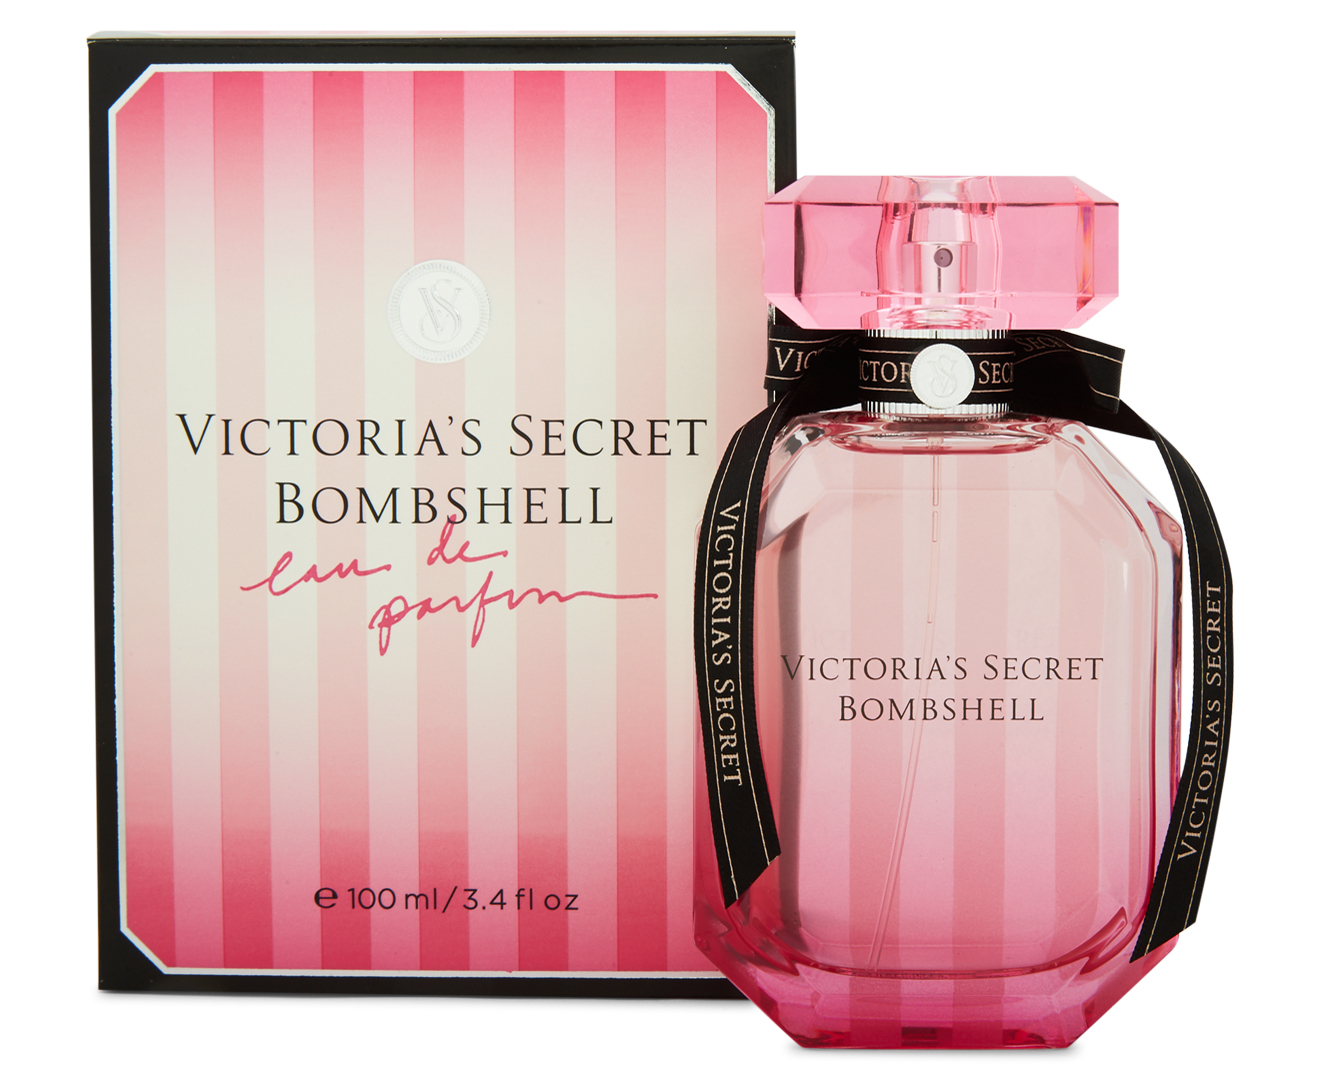 Victoria's Secret Bombshell EDP 100mL | Www.catch.com.au